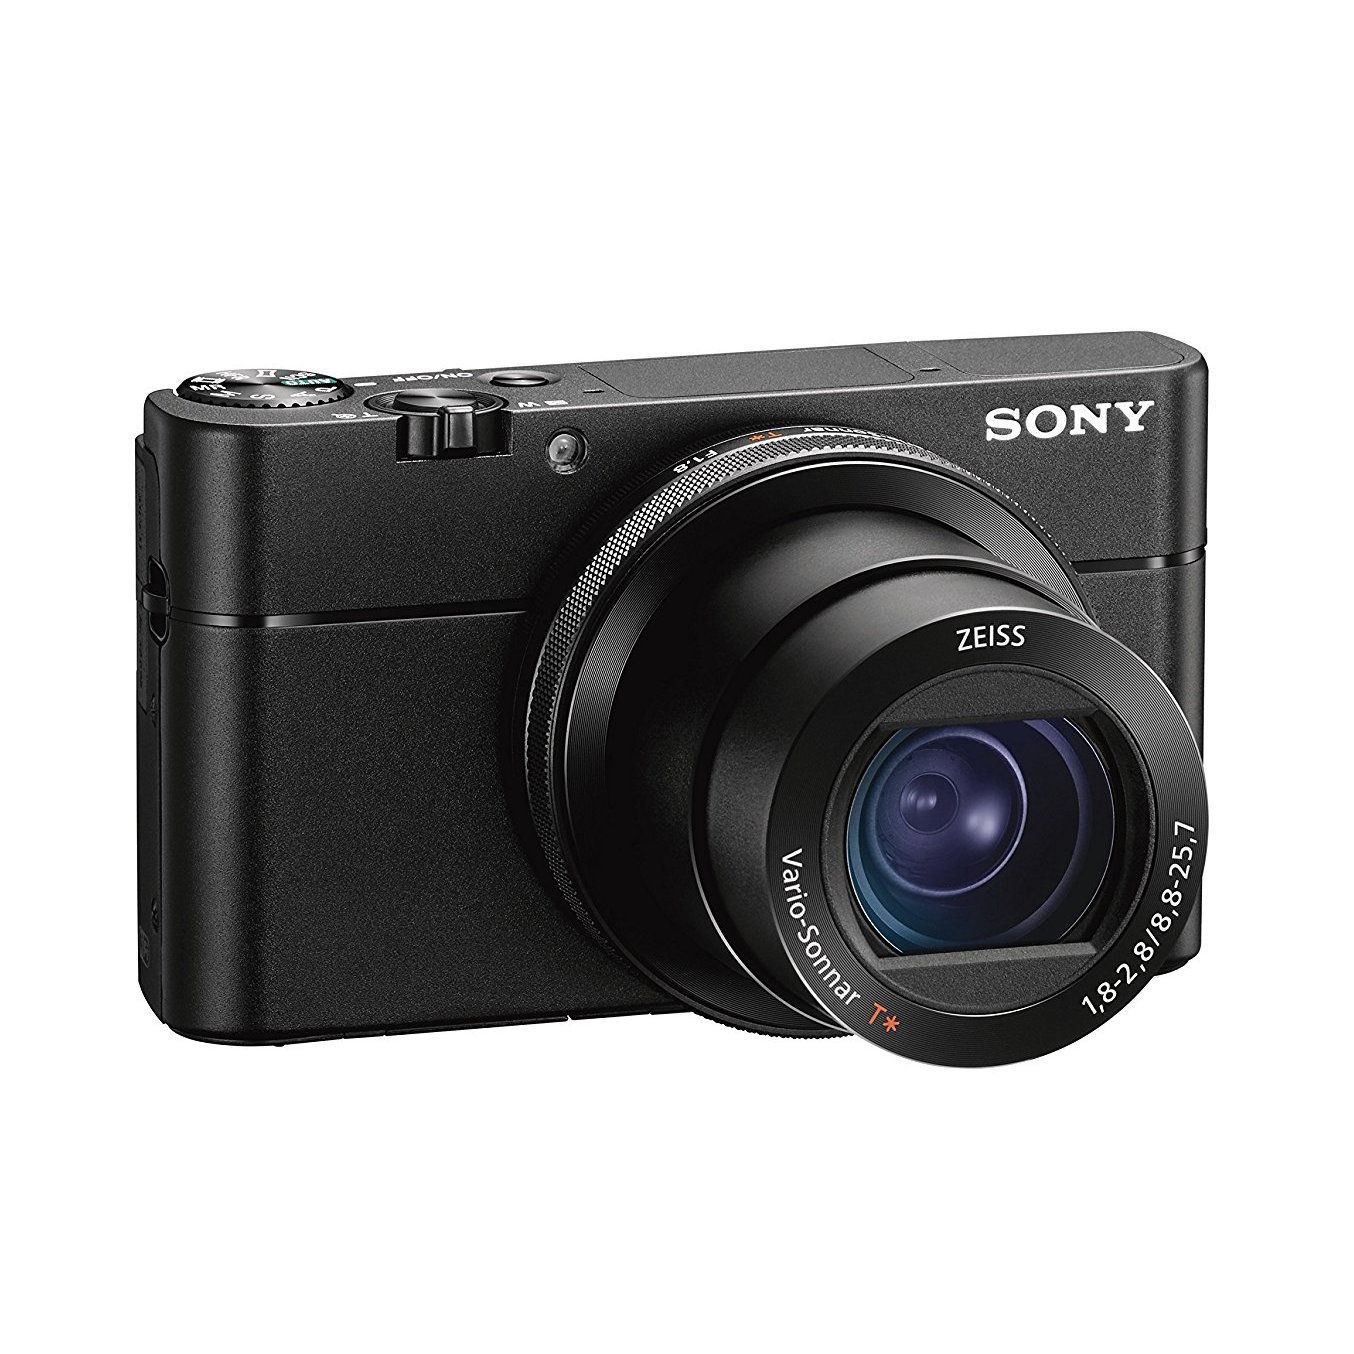 sony a350 digital slr camera